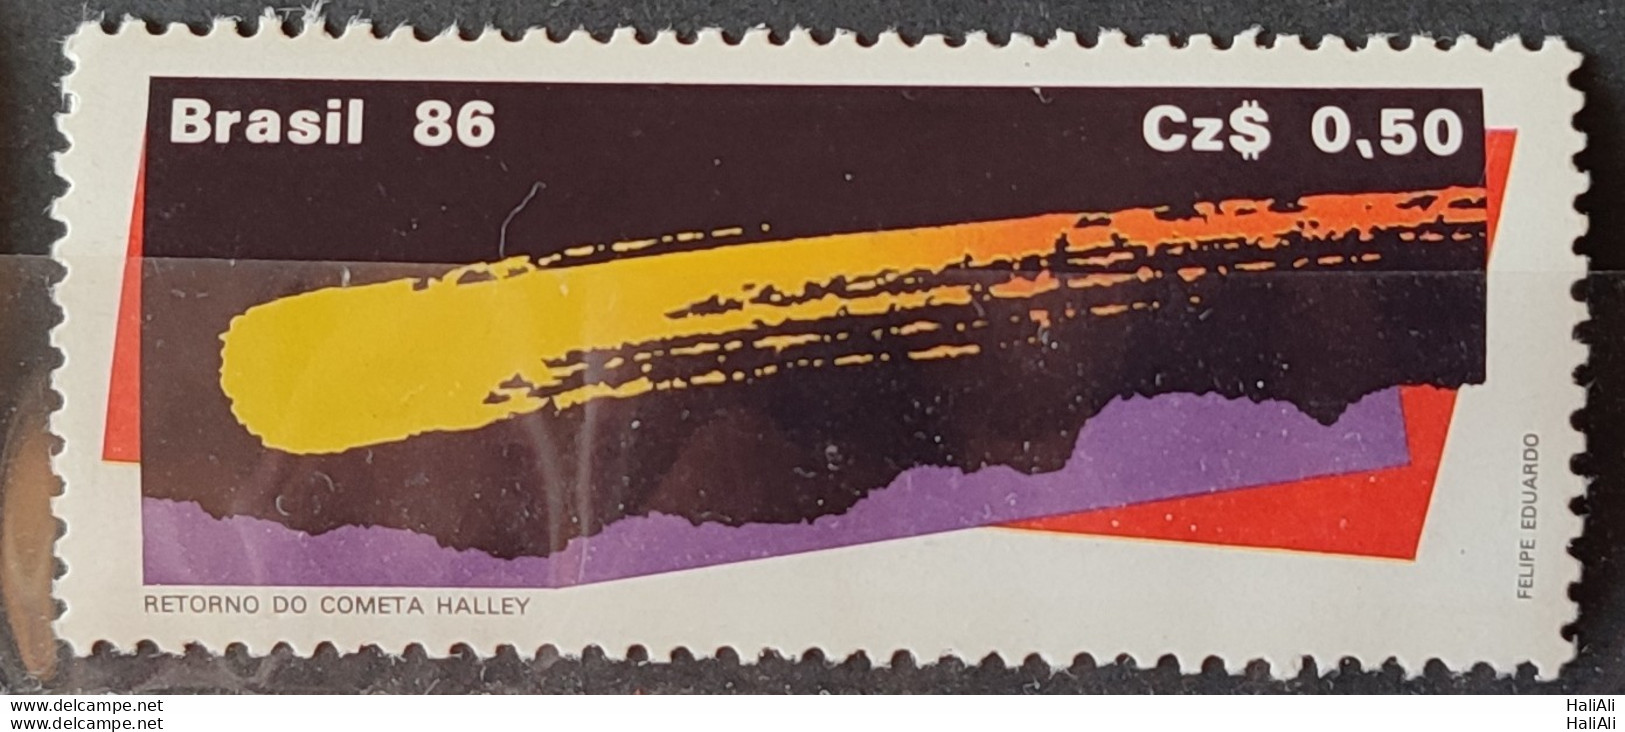 C 1507 Brazil Stamp Comet Halley Astronomy 1986.jpg - Unused Stamps